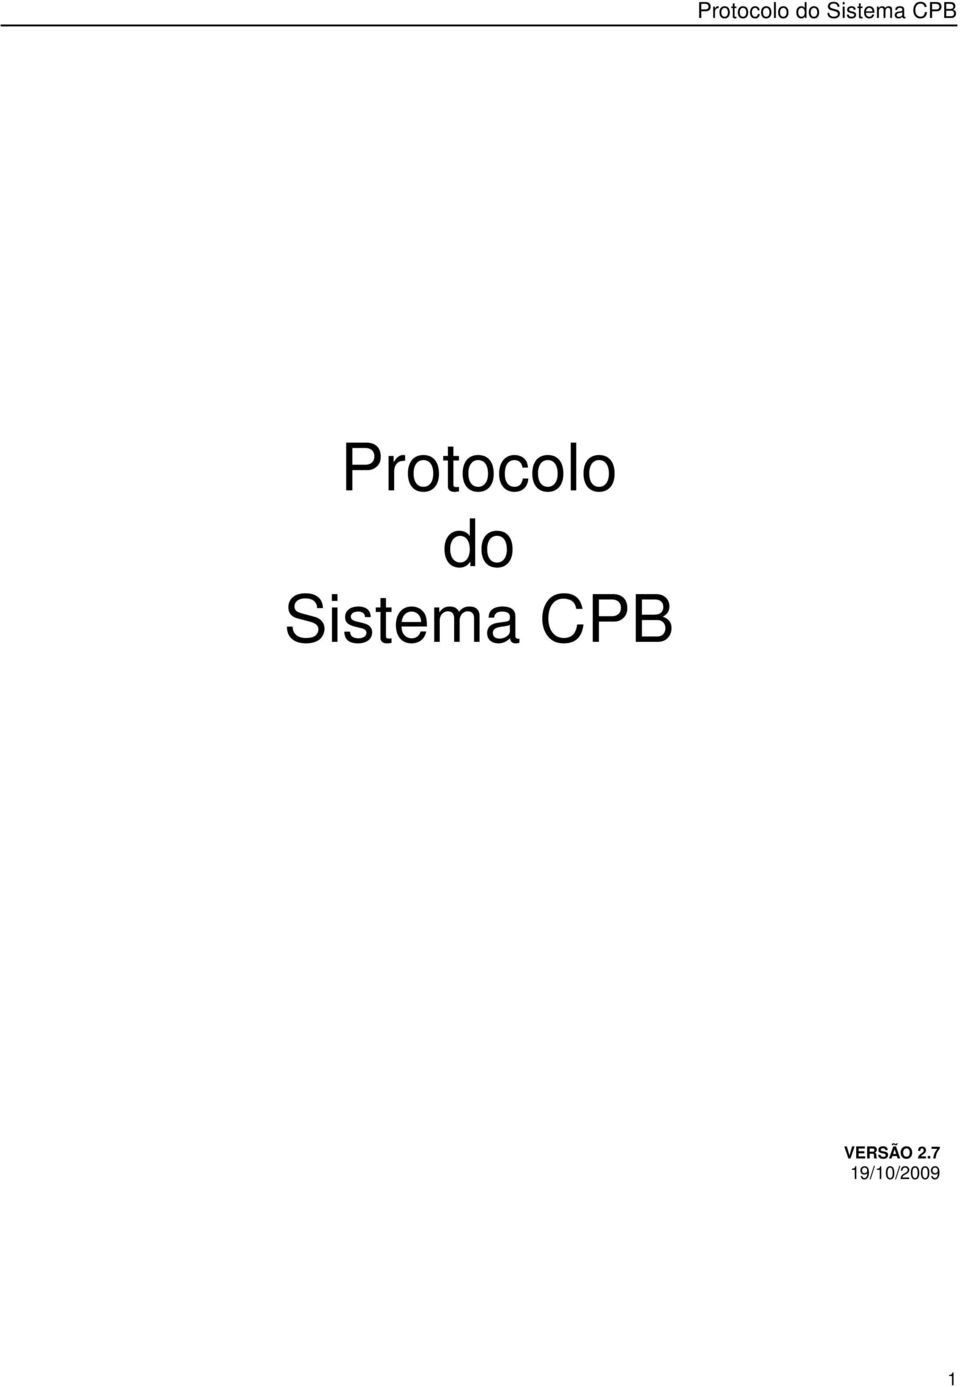 CPB VERSÃO